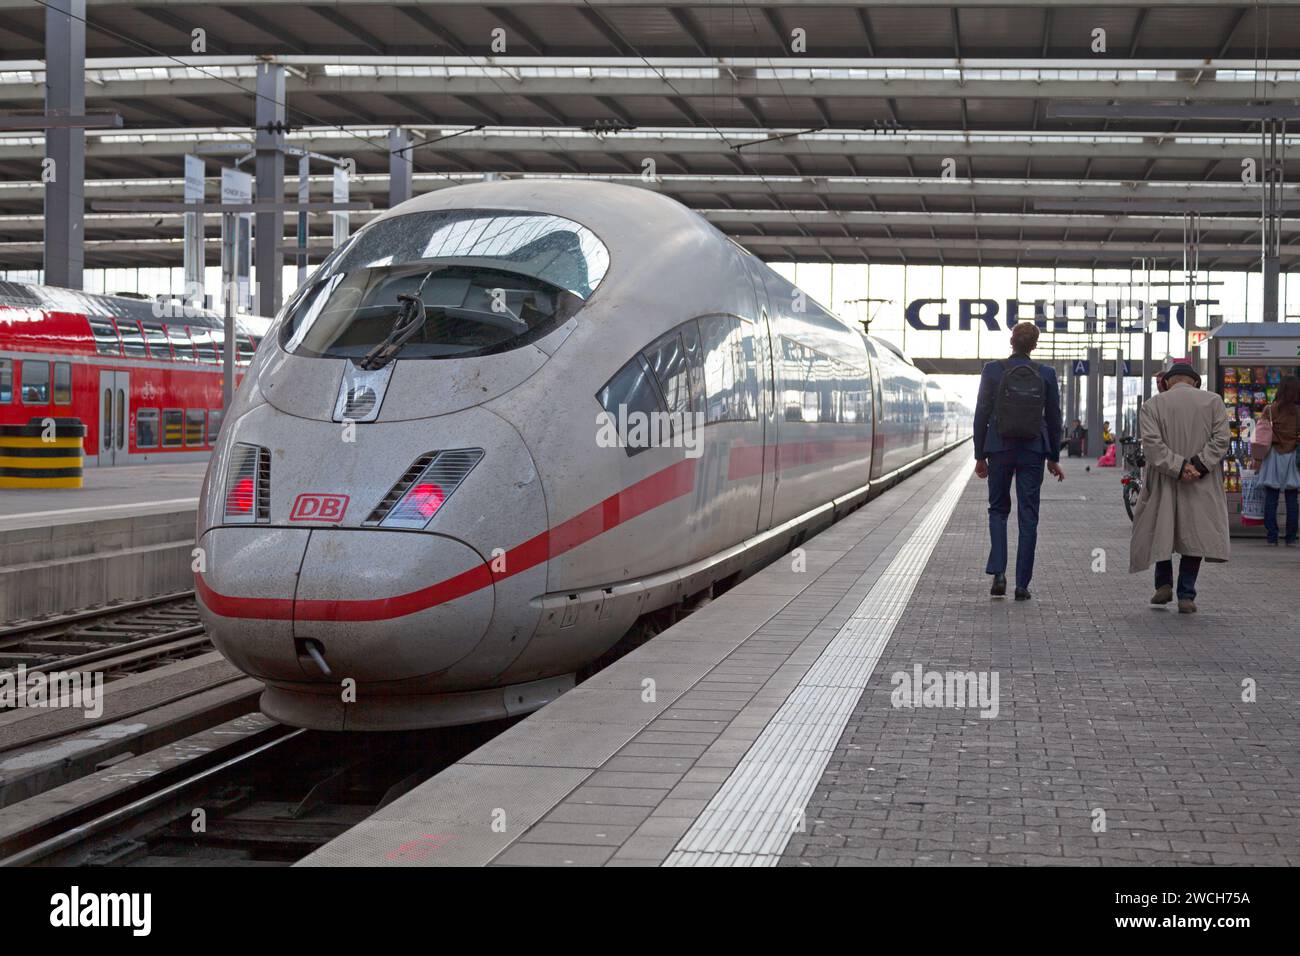 Munich, Germany - May 30 2019: A high-speed train ICE 3 (Class 403) at a platform of München Hauptbahnhof (German for Munich main railway station). Stock Photo